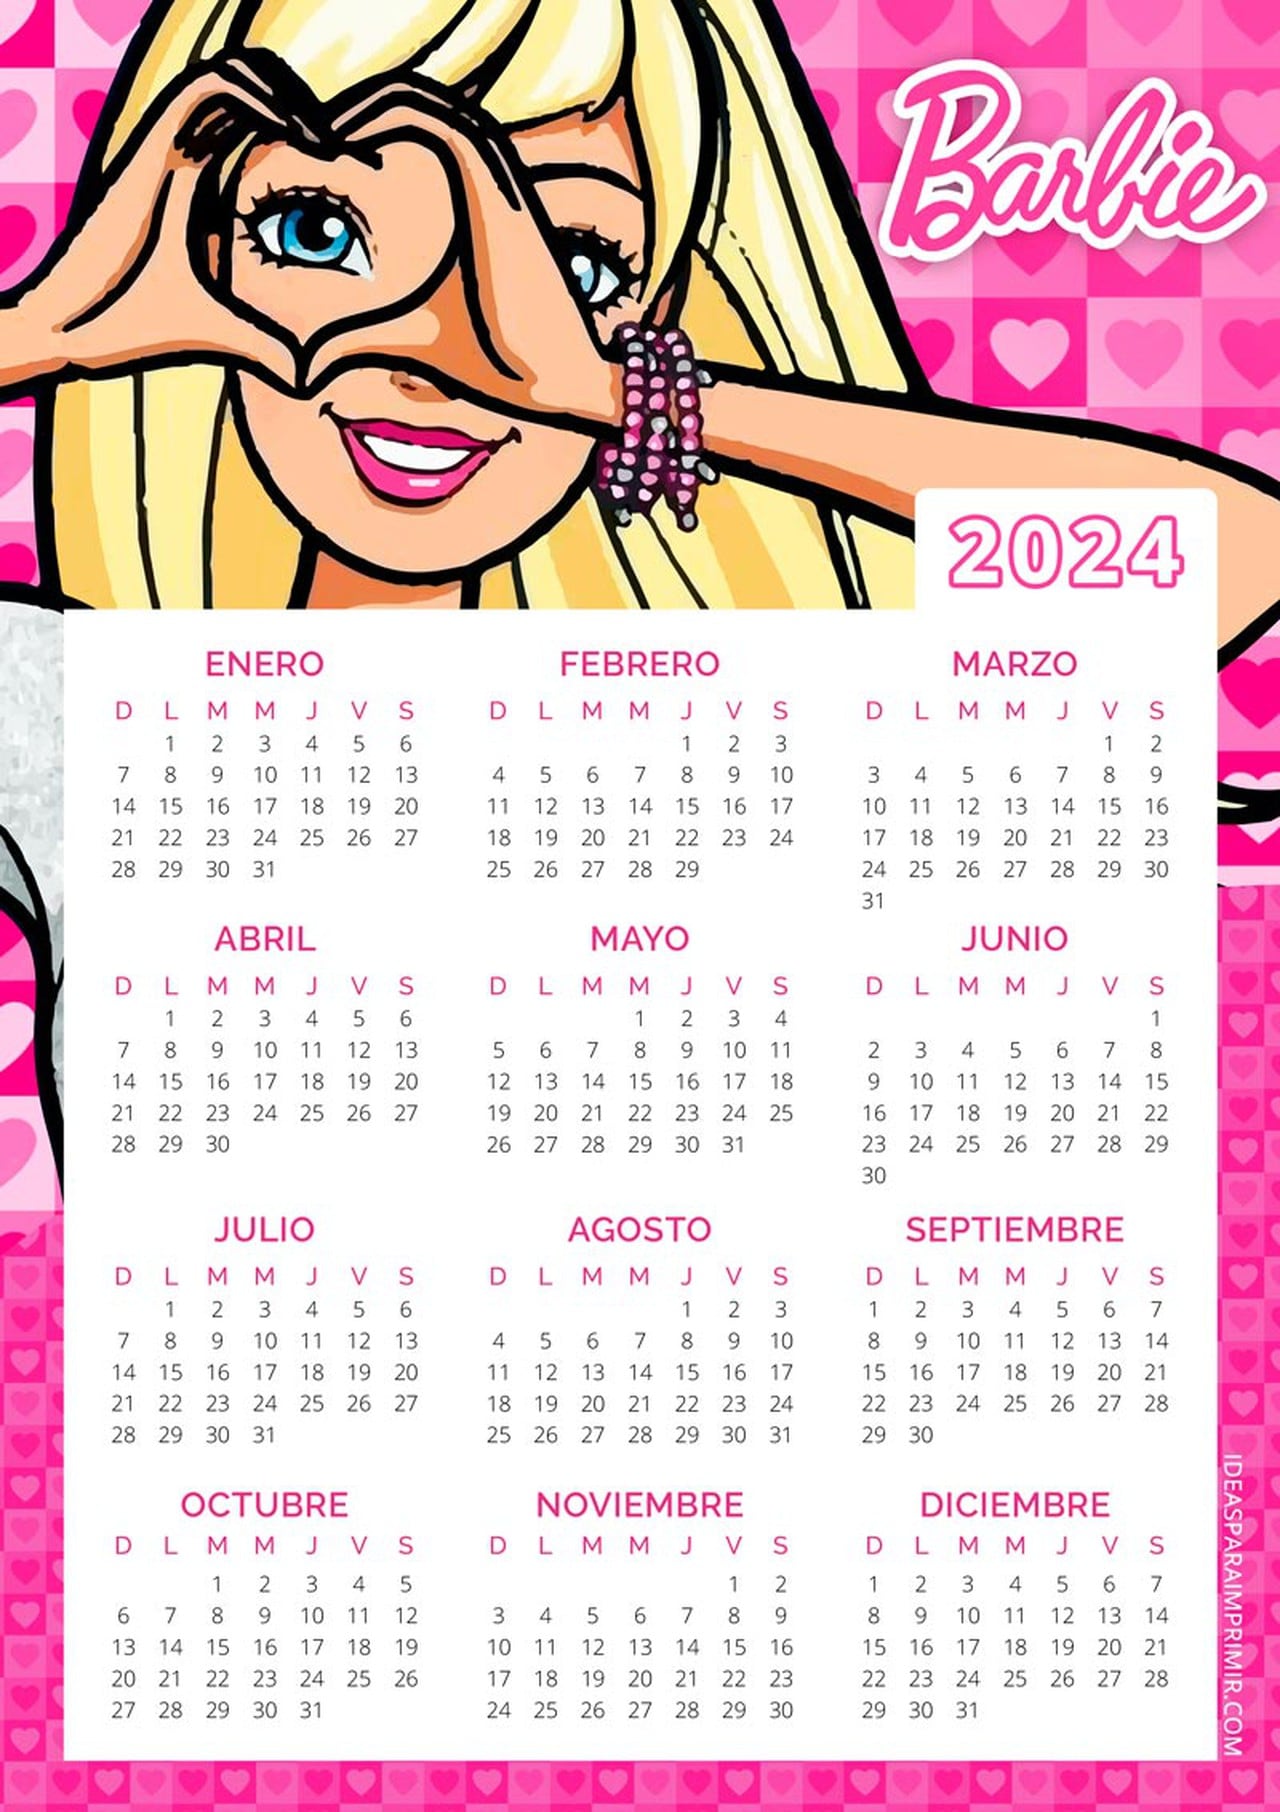 Calendario de Barbie 2024 Plantilla para editar e imprimir